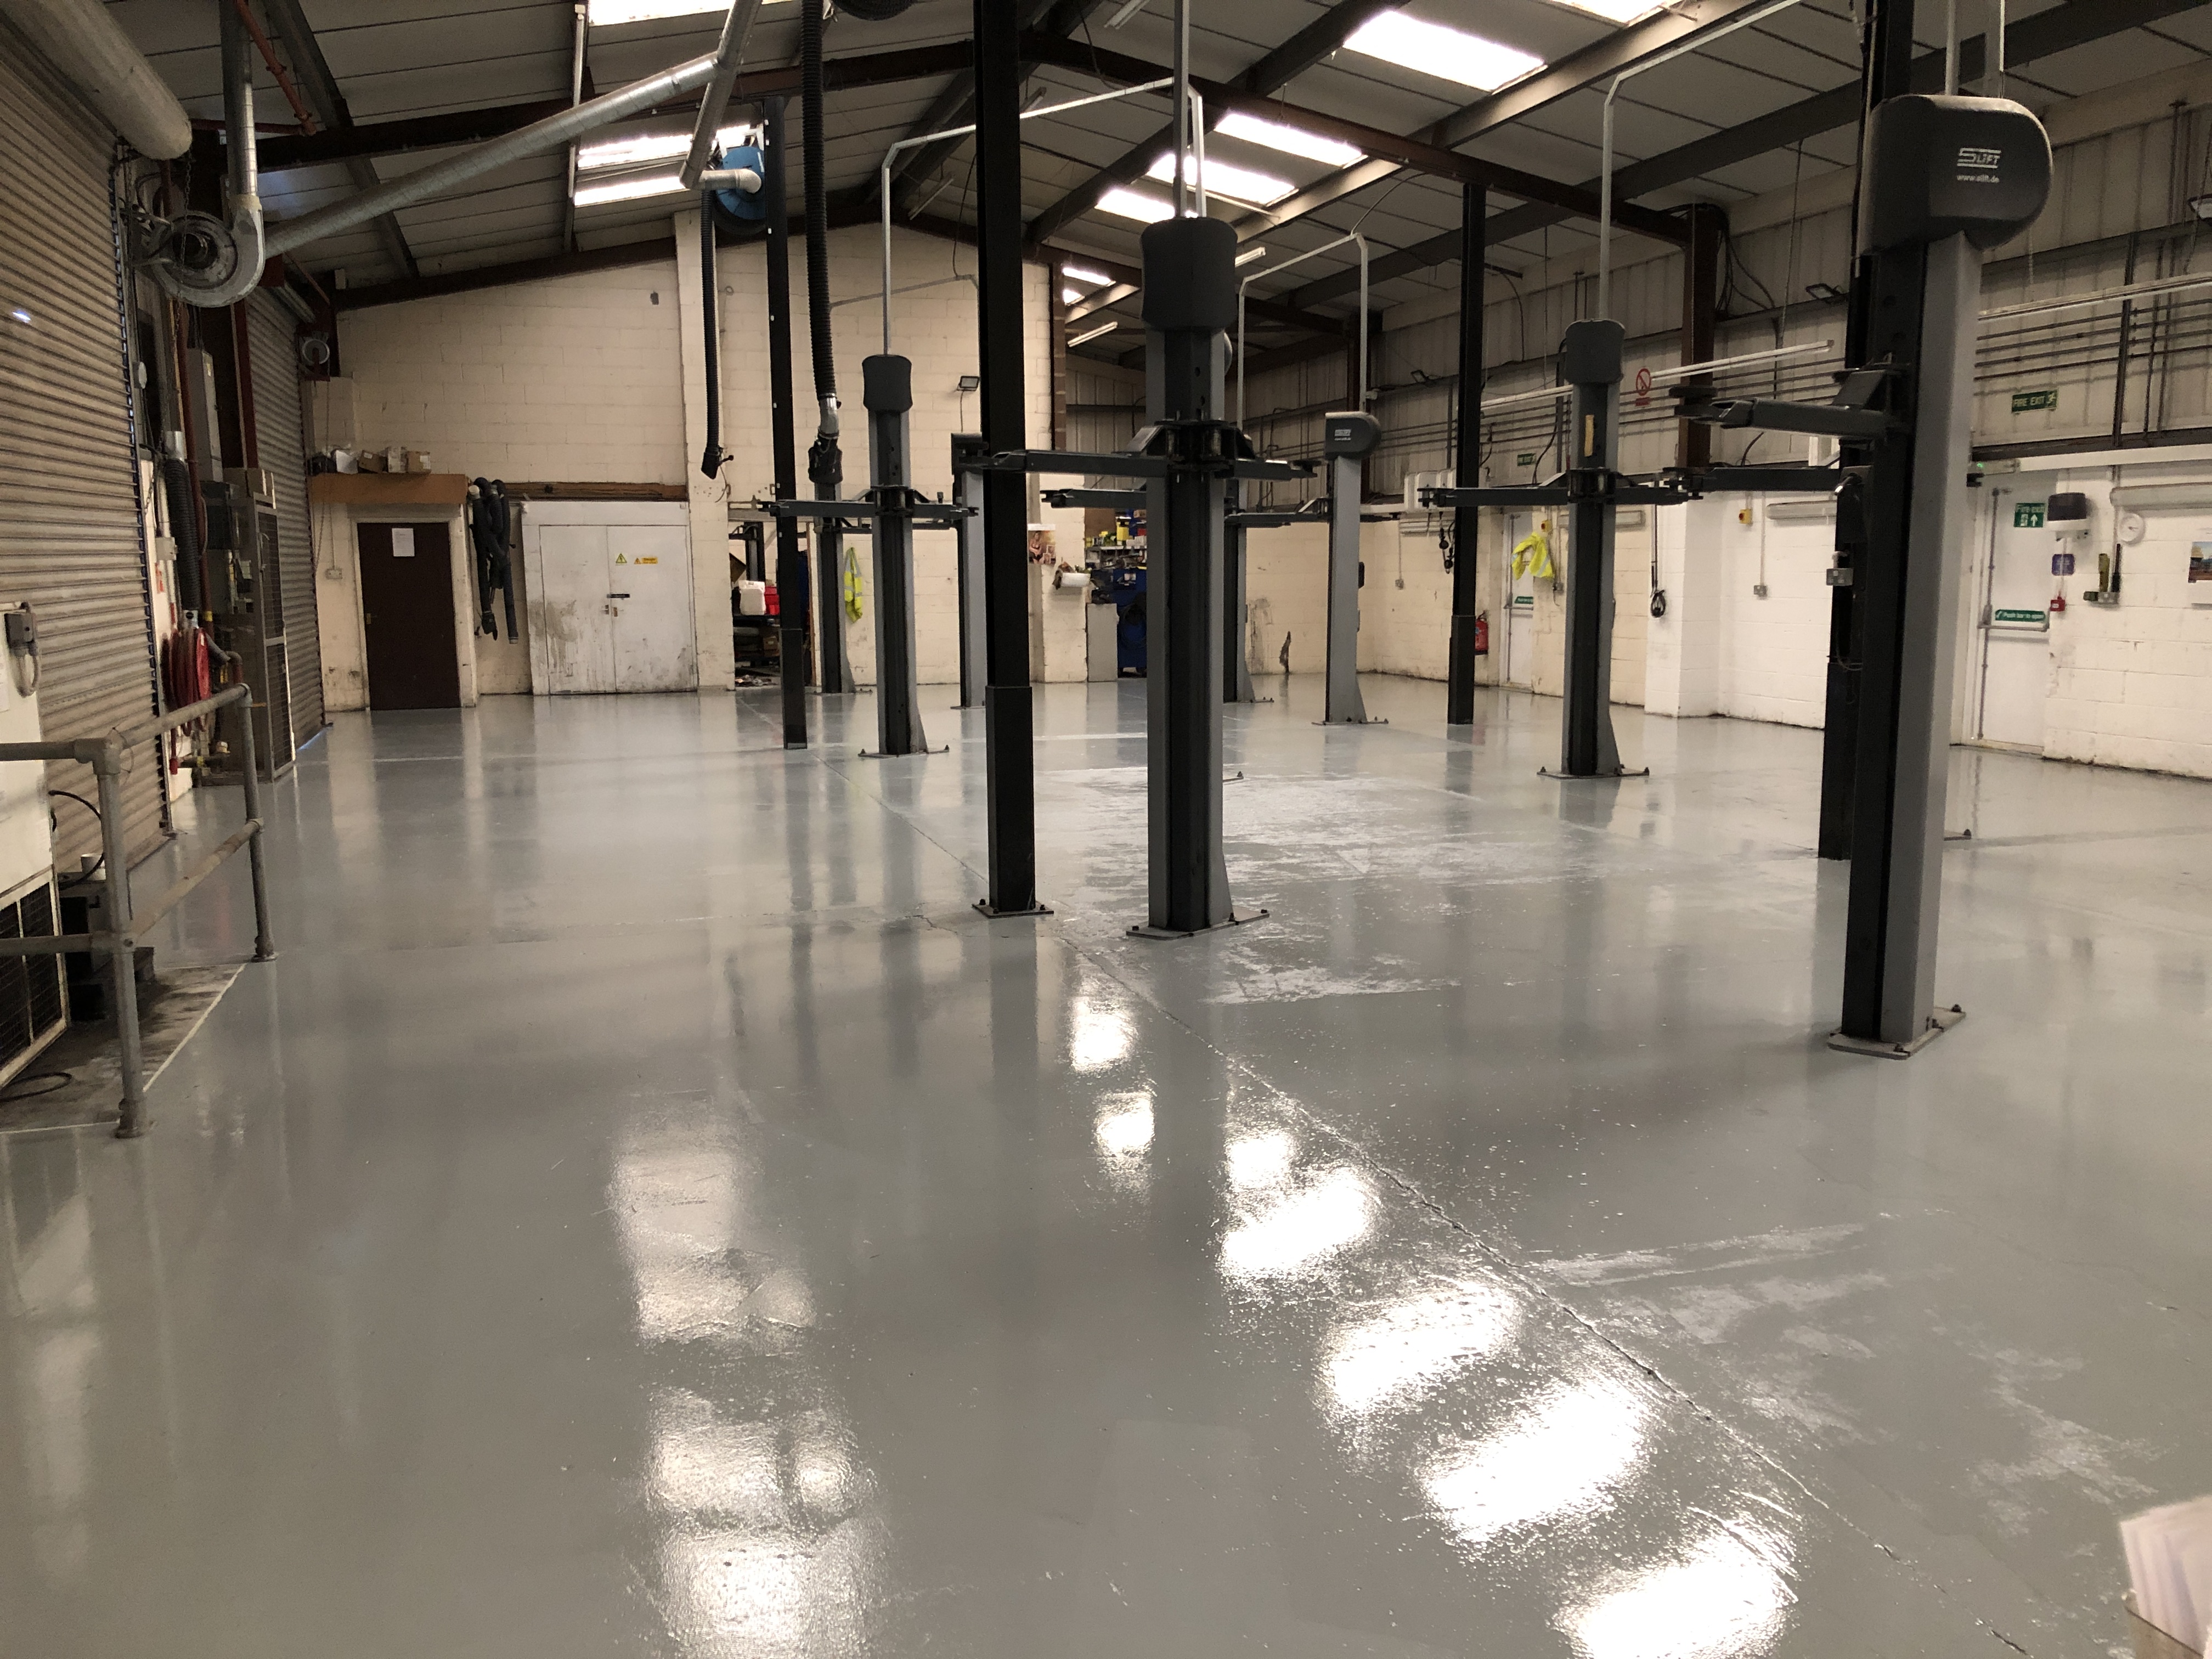 Our freshly painted workshop floor, 2 pack epoxy paint.